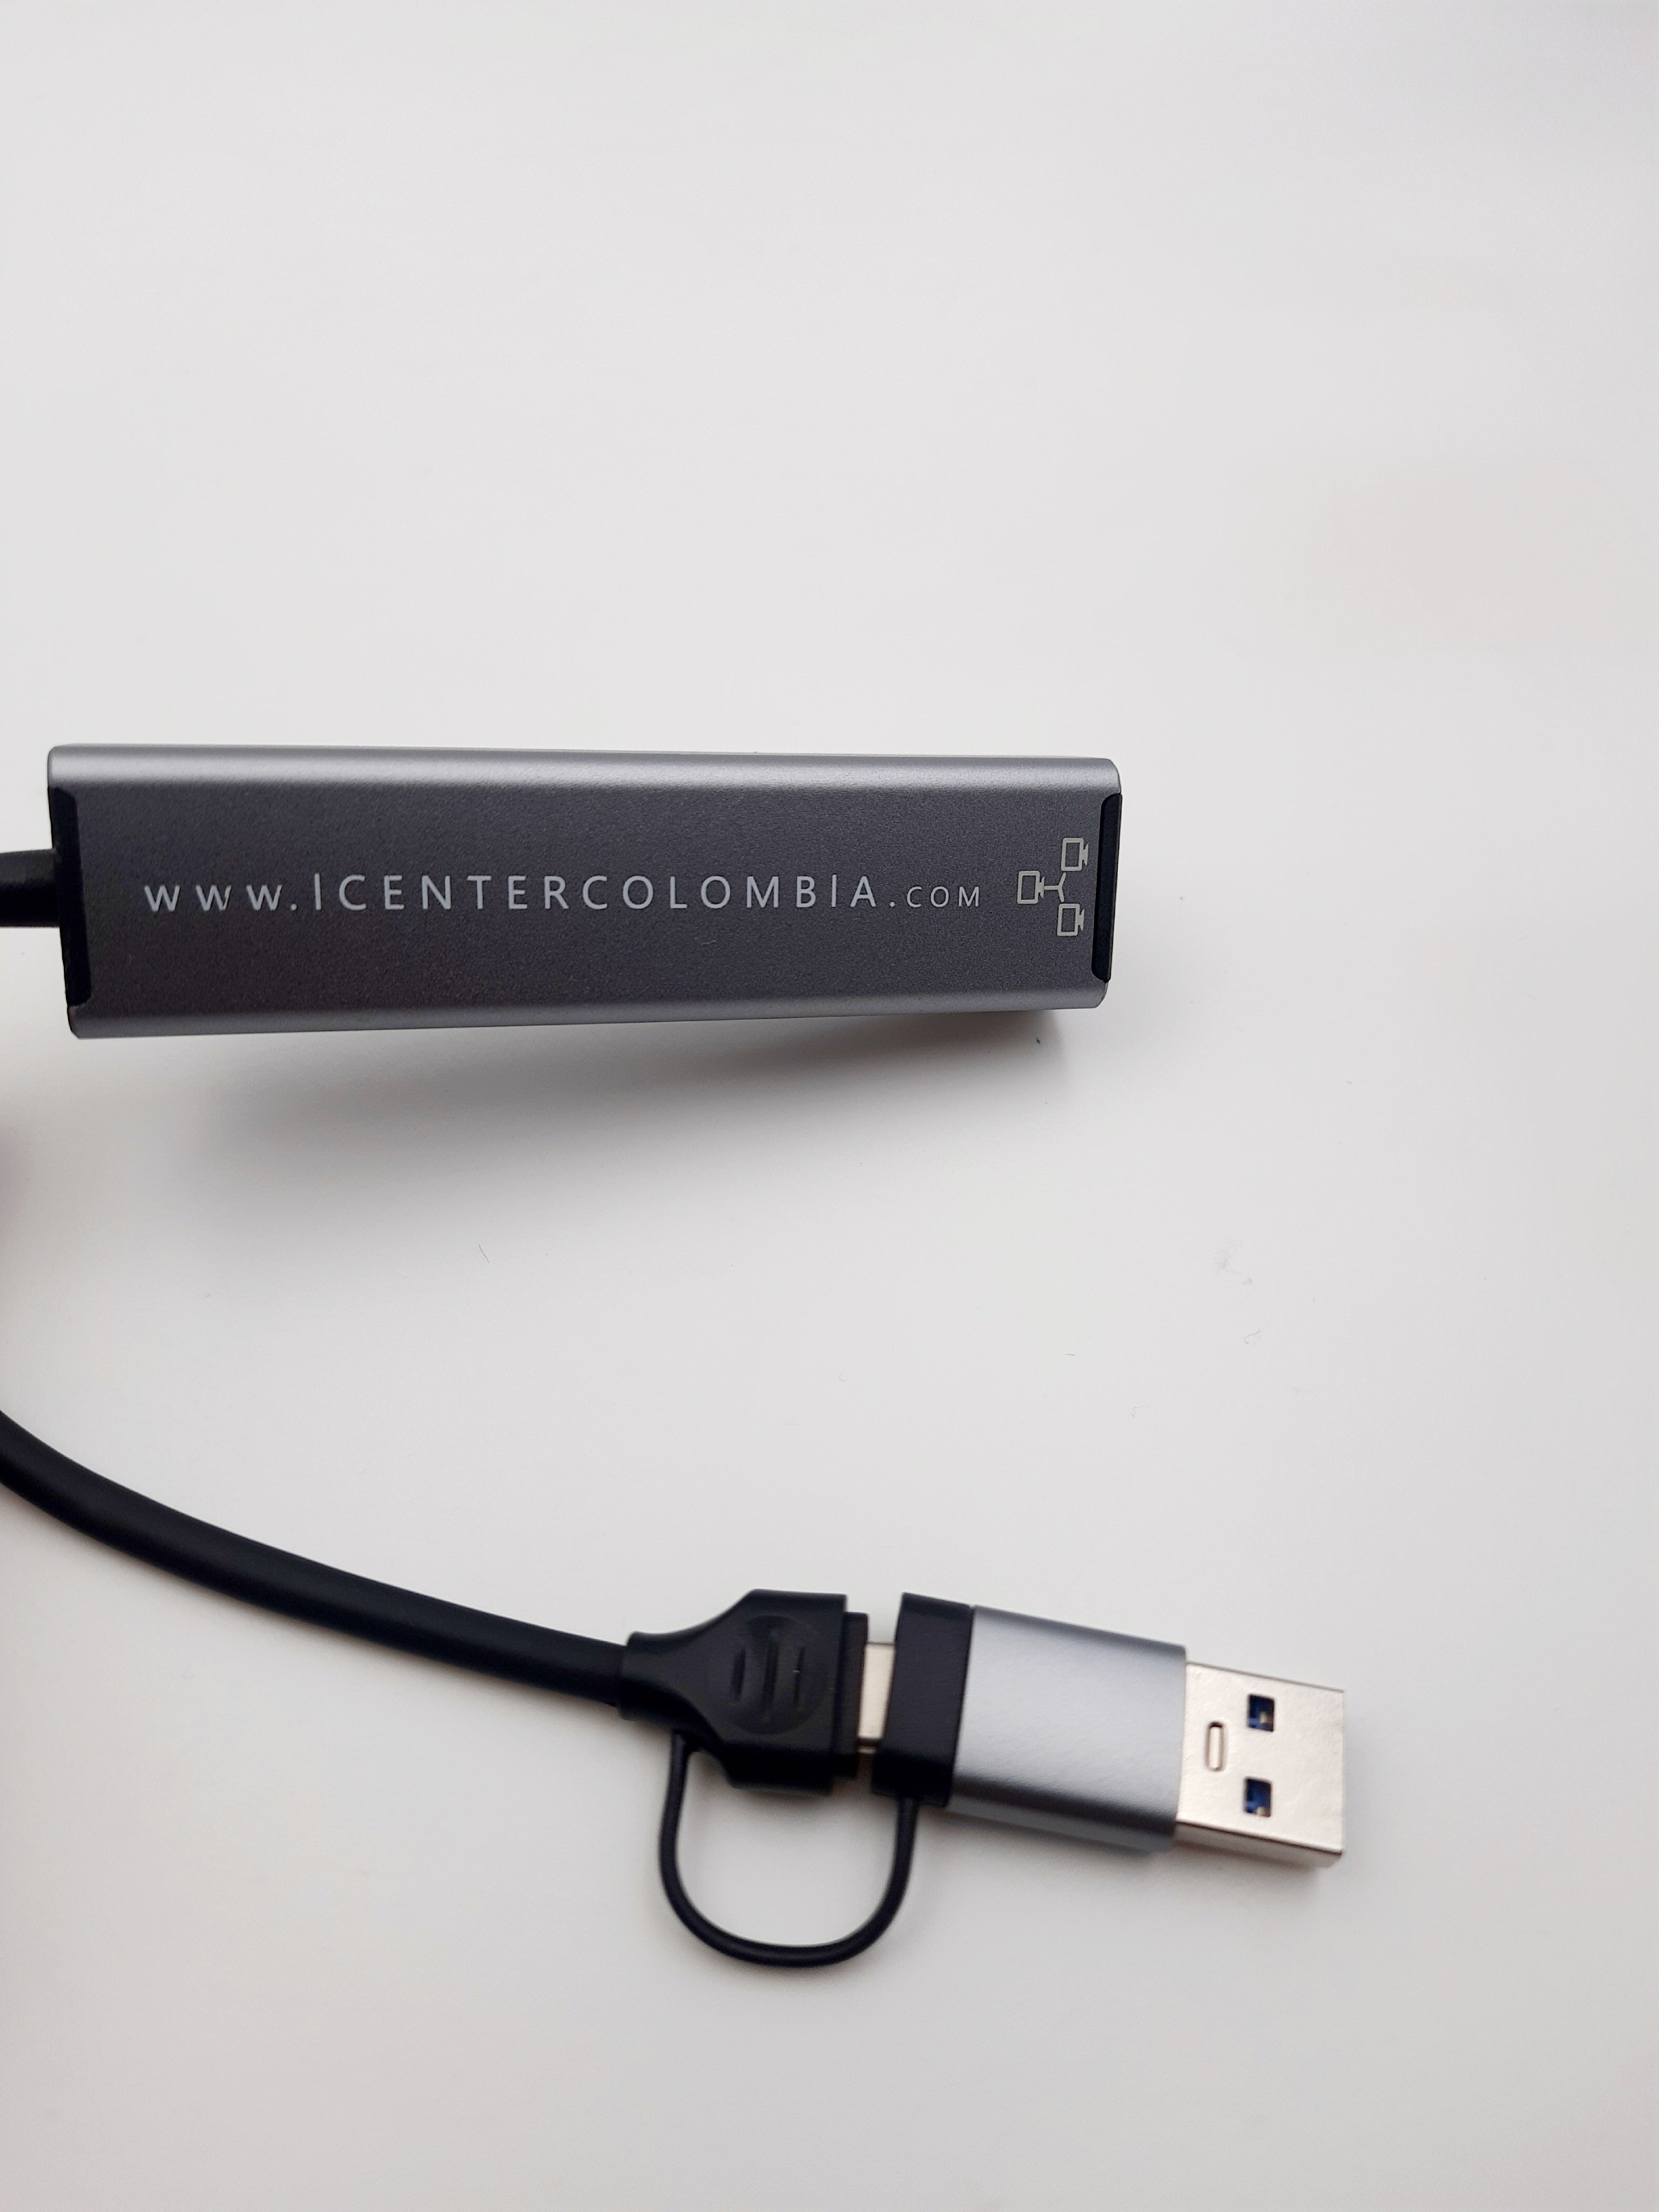 Adaptador Thunderbolt 3 Usb C A Ethernet Macbook Pro iMac – iCenter Colombia